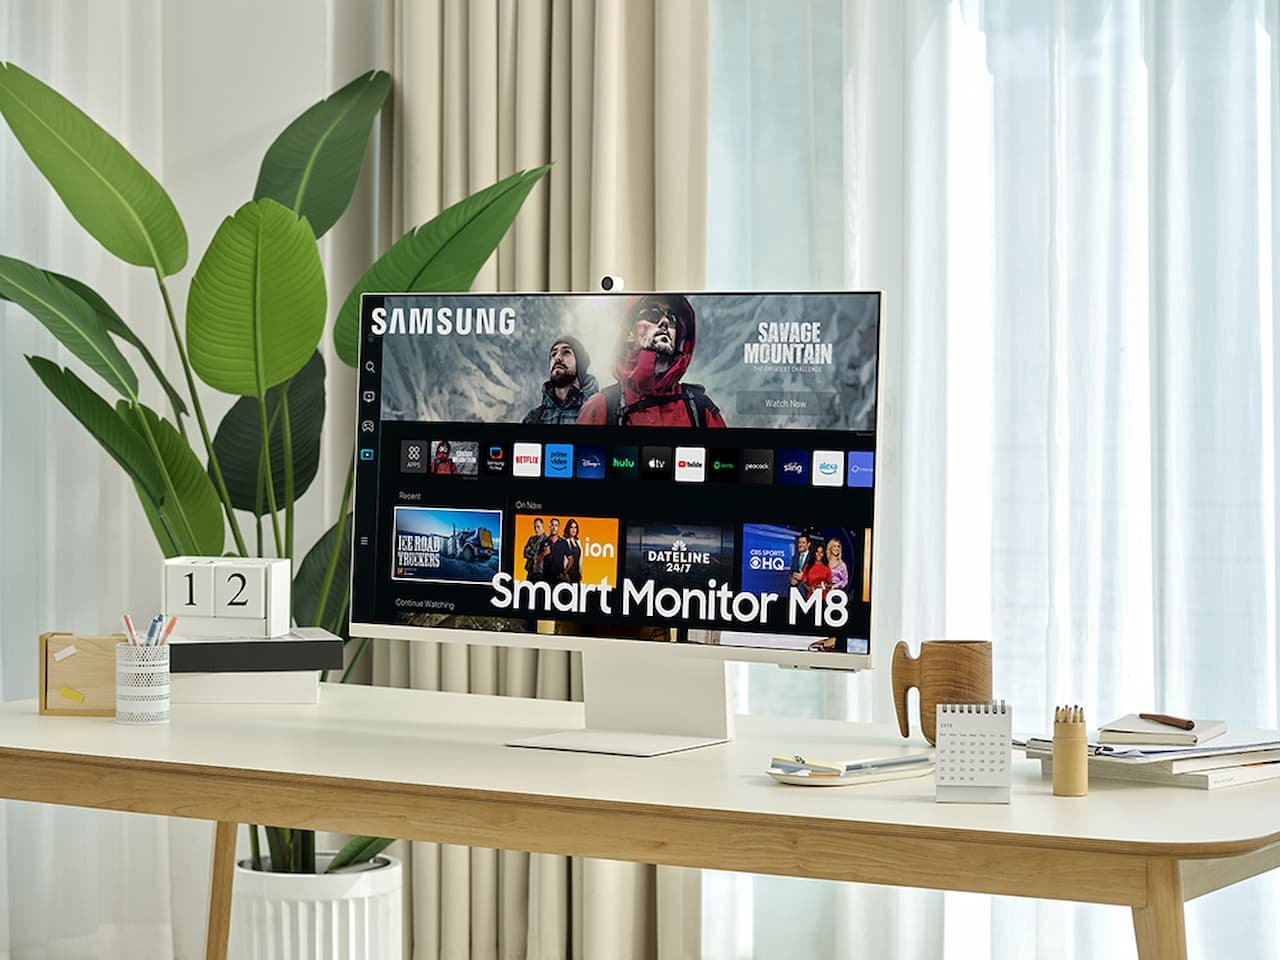 Samsung's new M8 Smart Monitor